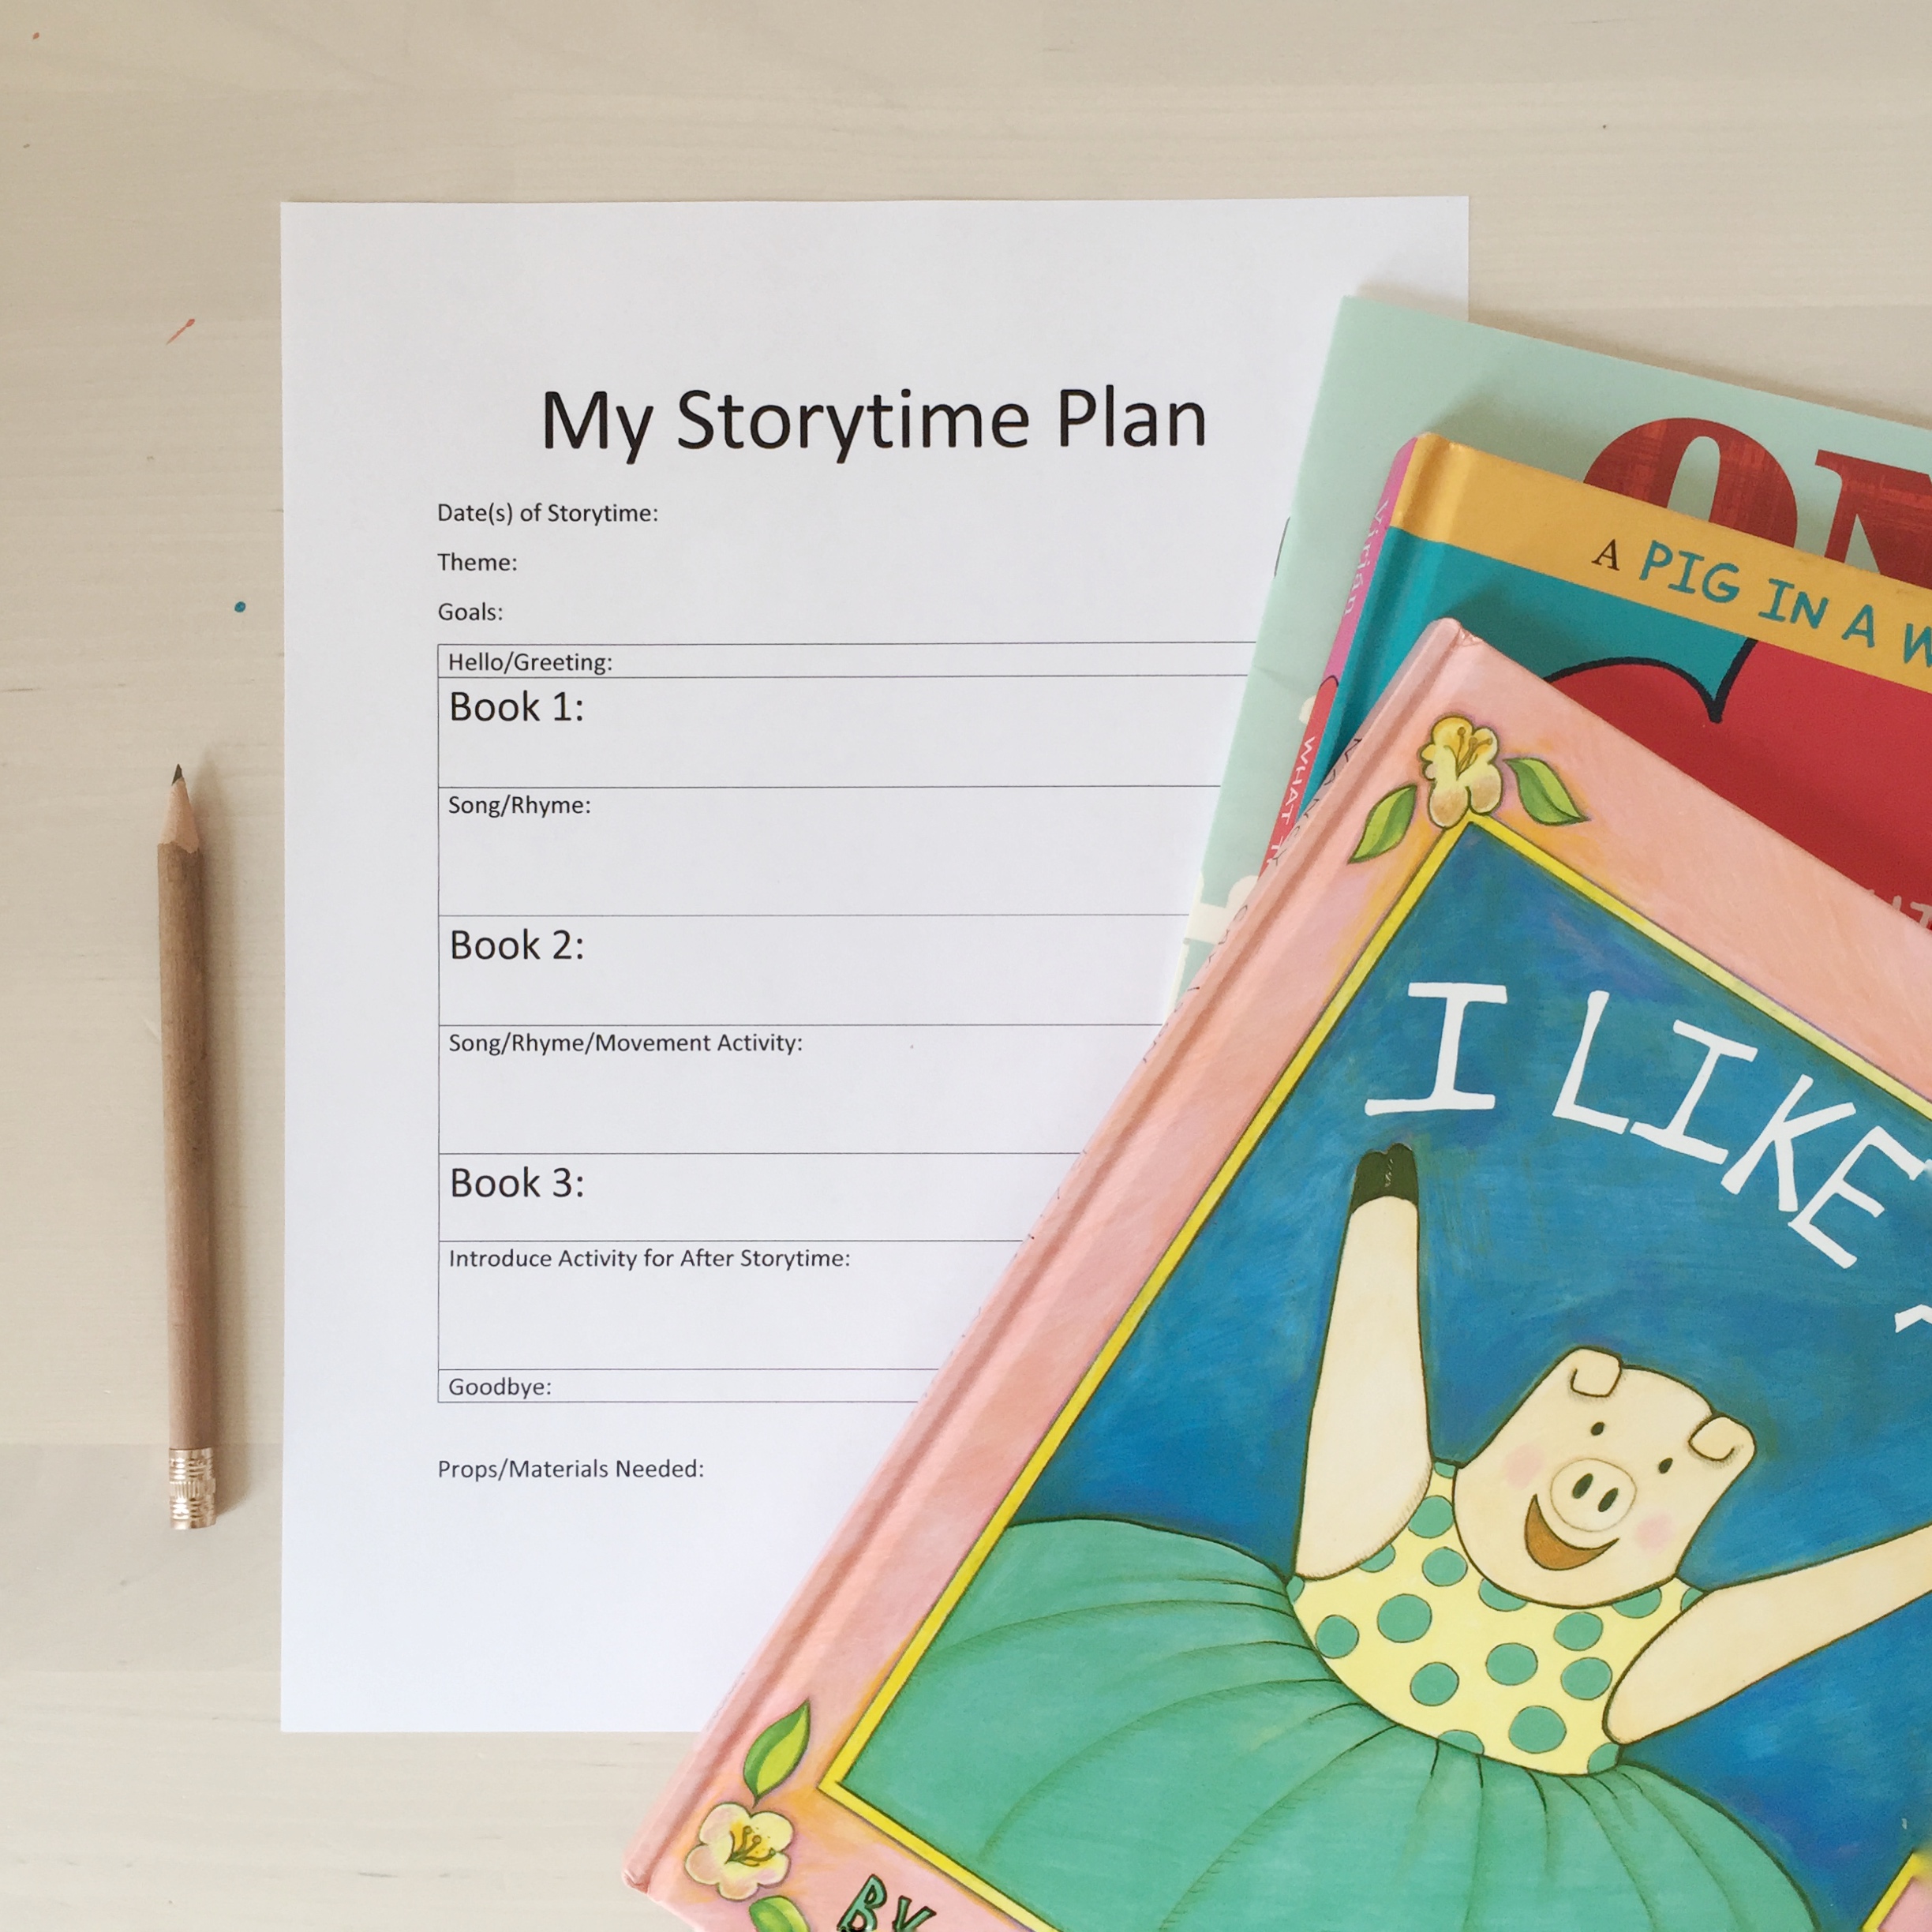 My Storytime Plan